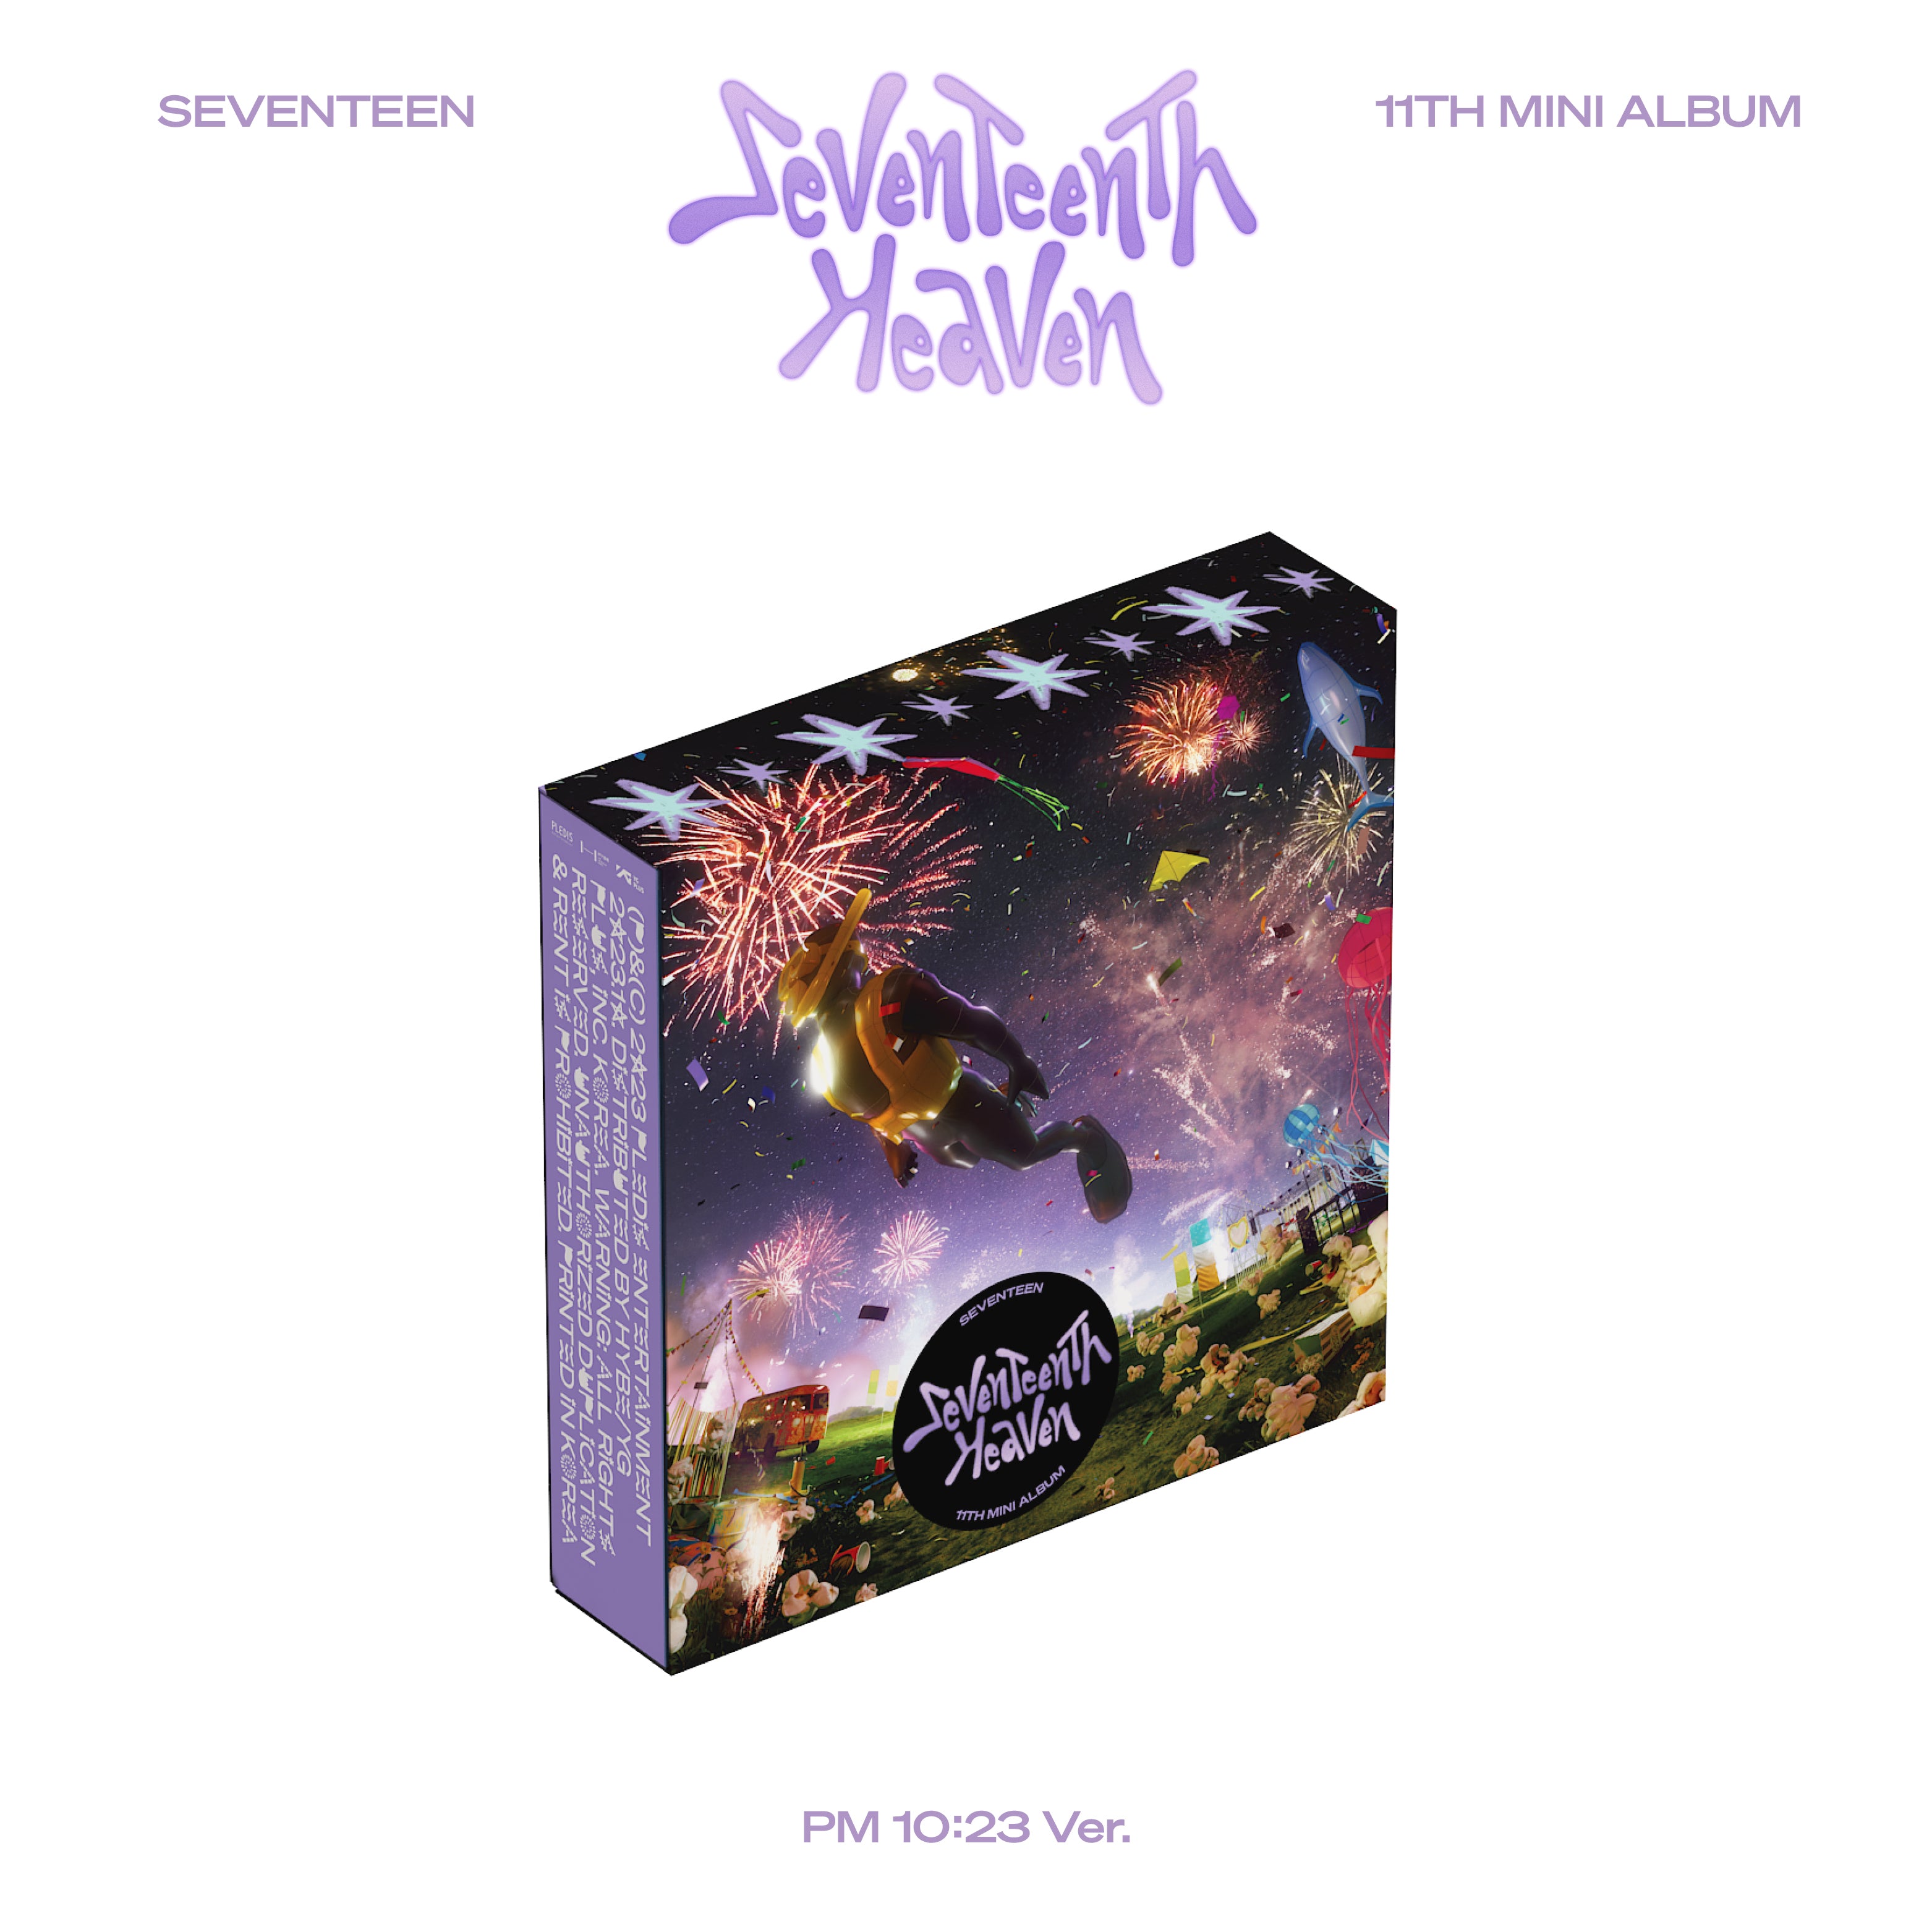 SEVENTEEN - SEVENTEENTH HEAVEN (PM 10:23 Version): CD Box Set